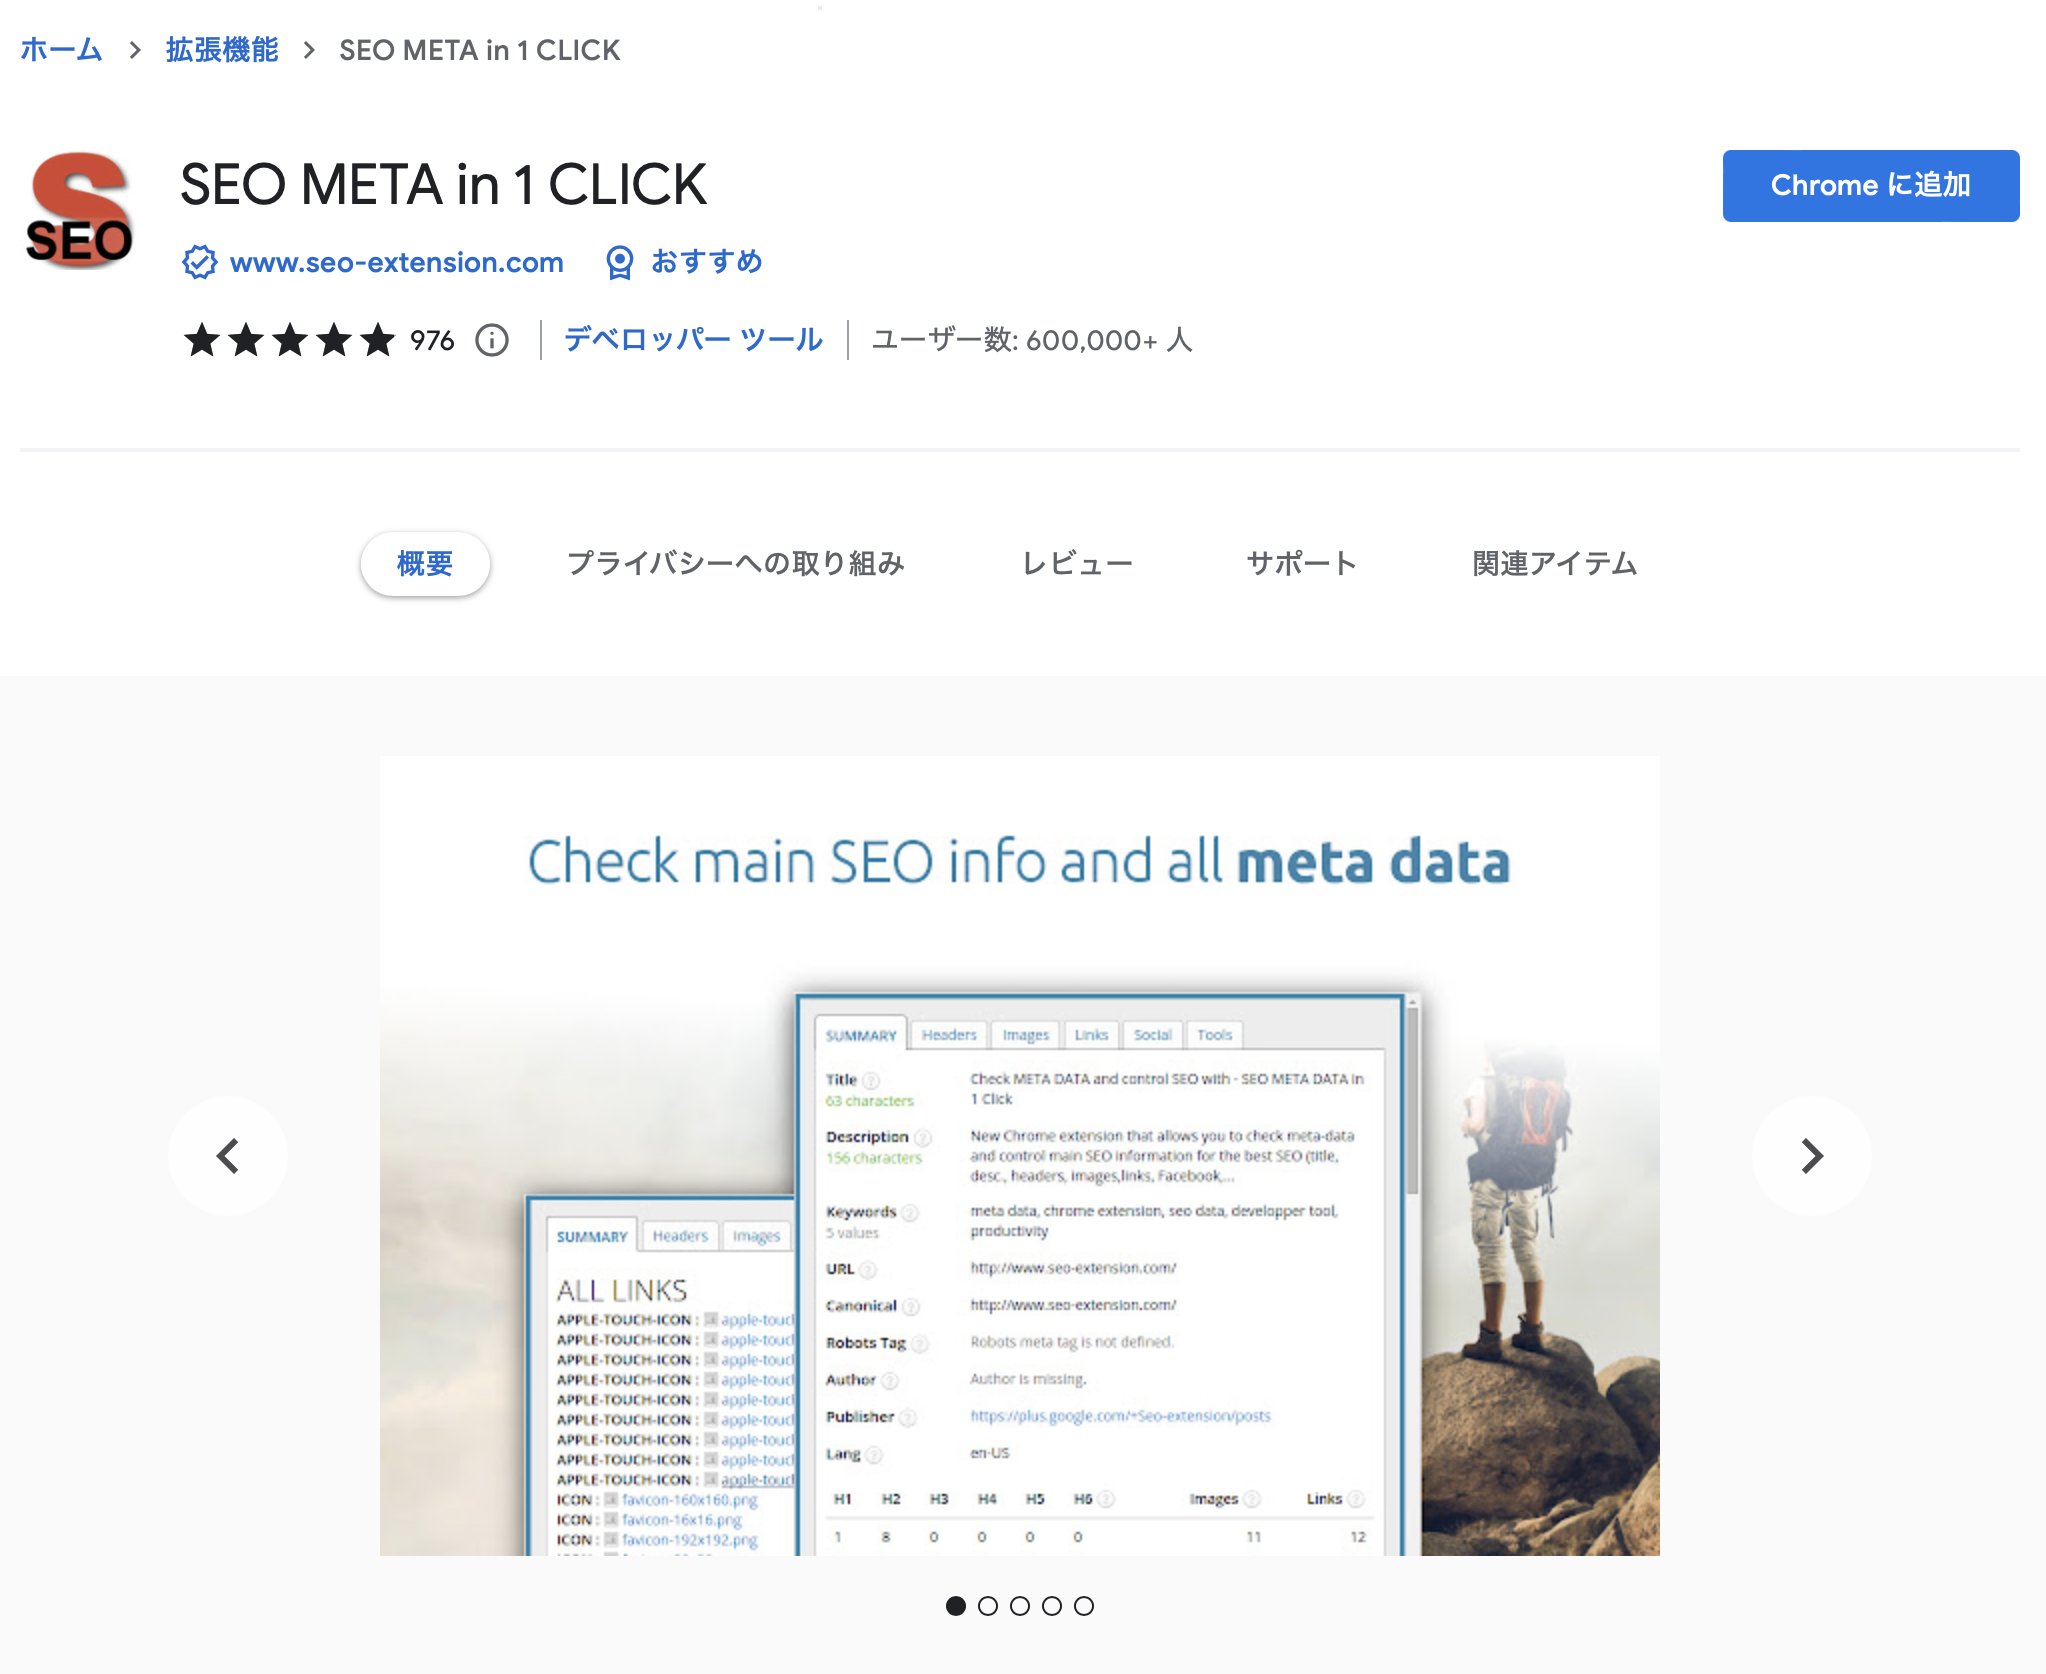 「SEO META in 1 CLICK」参考サイト：https://chrome.google.com/webstore/detail/seo-meta-in-1-click/bjogjfinolnhfhkbipphpdlldadpnmhc?hl=ja